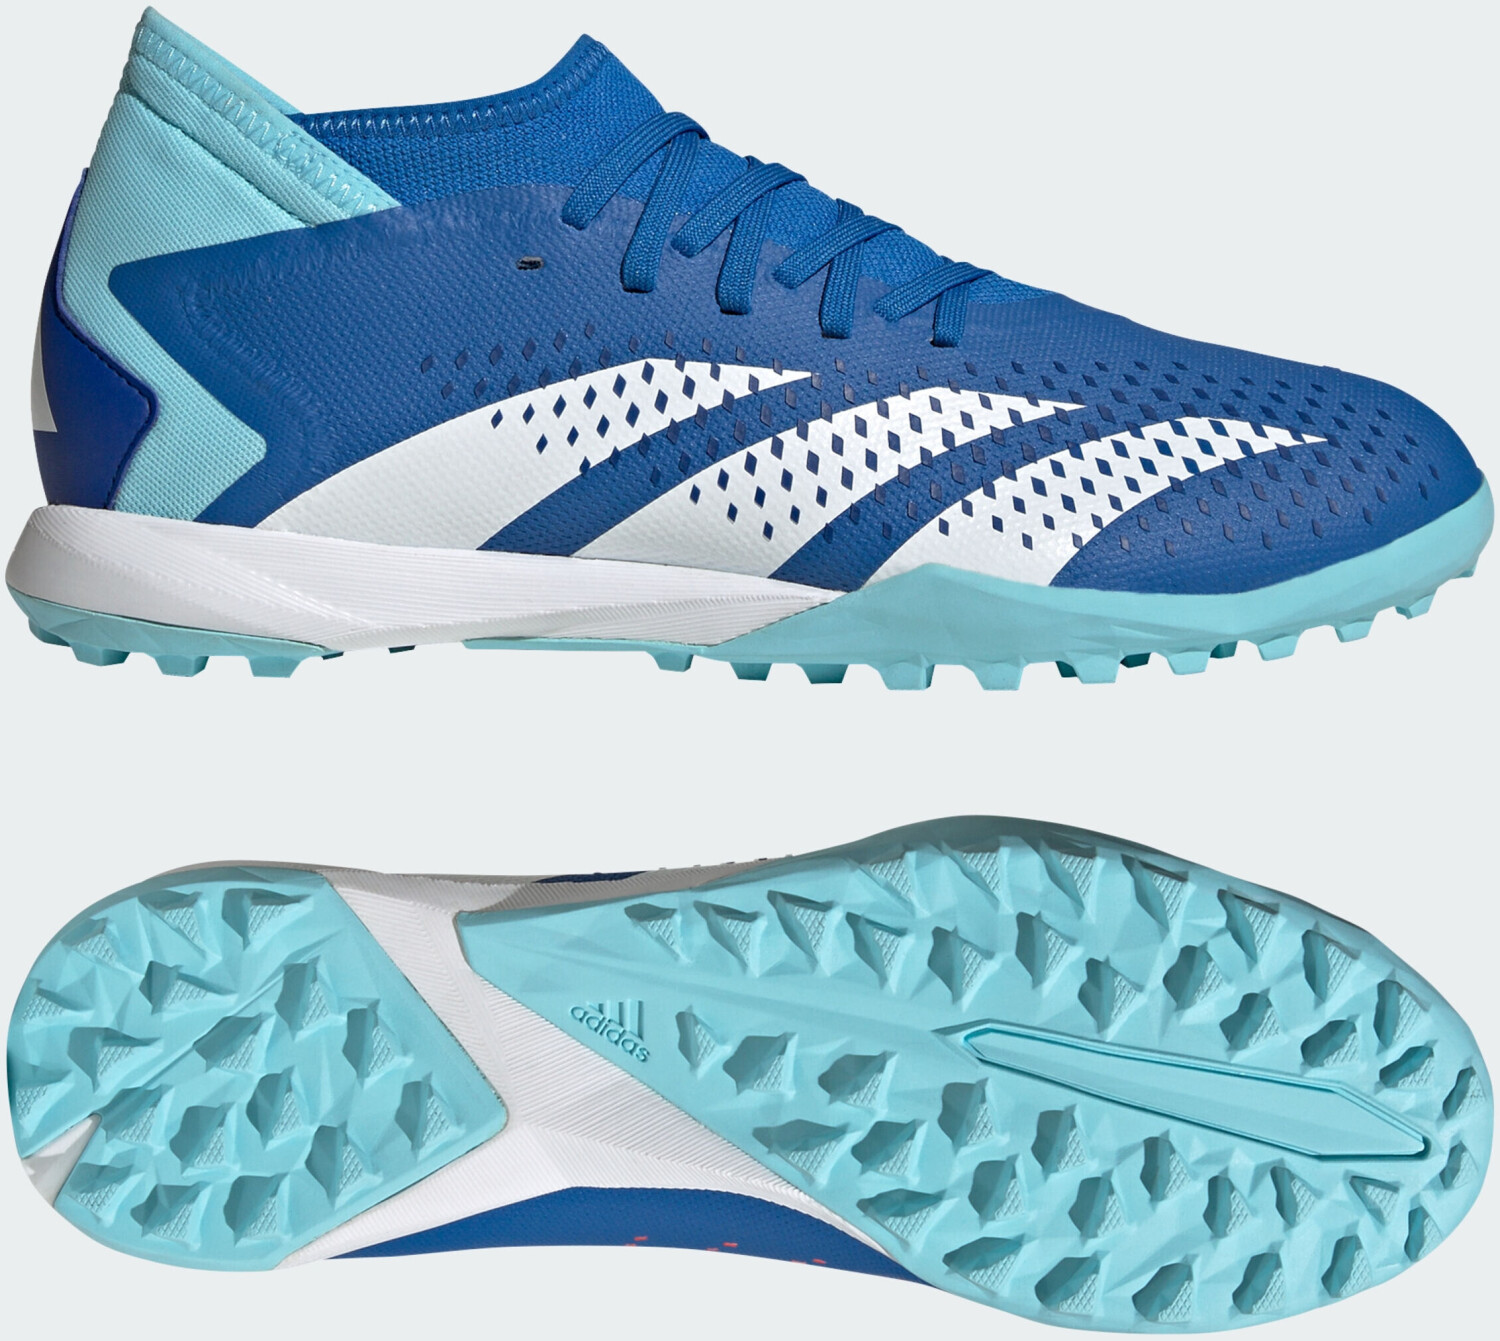 Adidas 58,50 | bei blue royal/cloud TF € Predator (GZ0007) bright Accuracy.3 Preisvergleich ab white/bliss